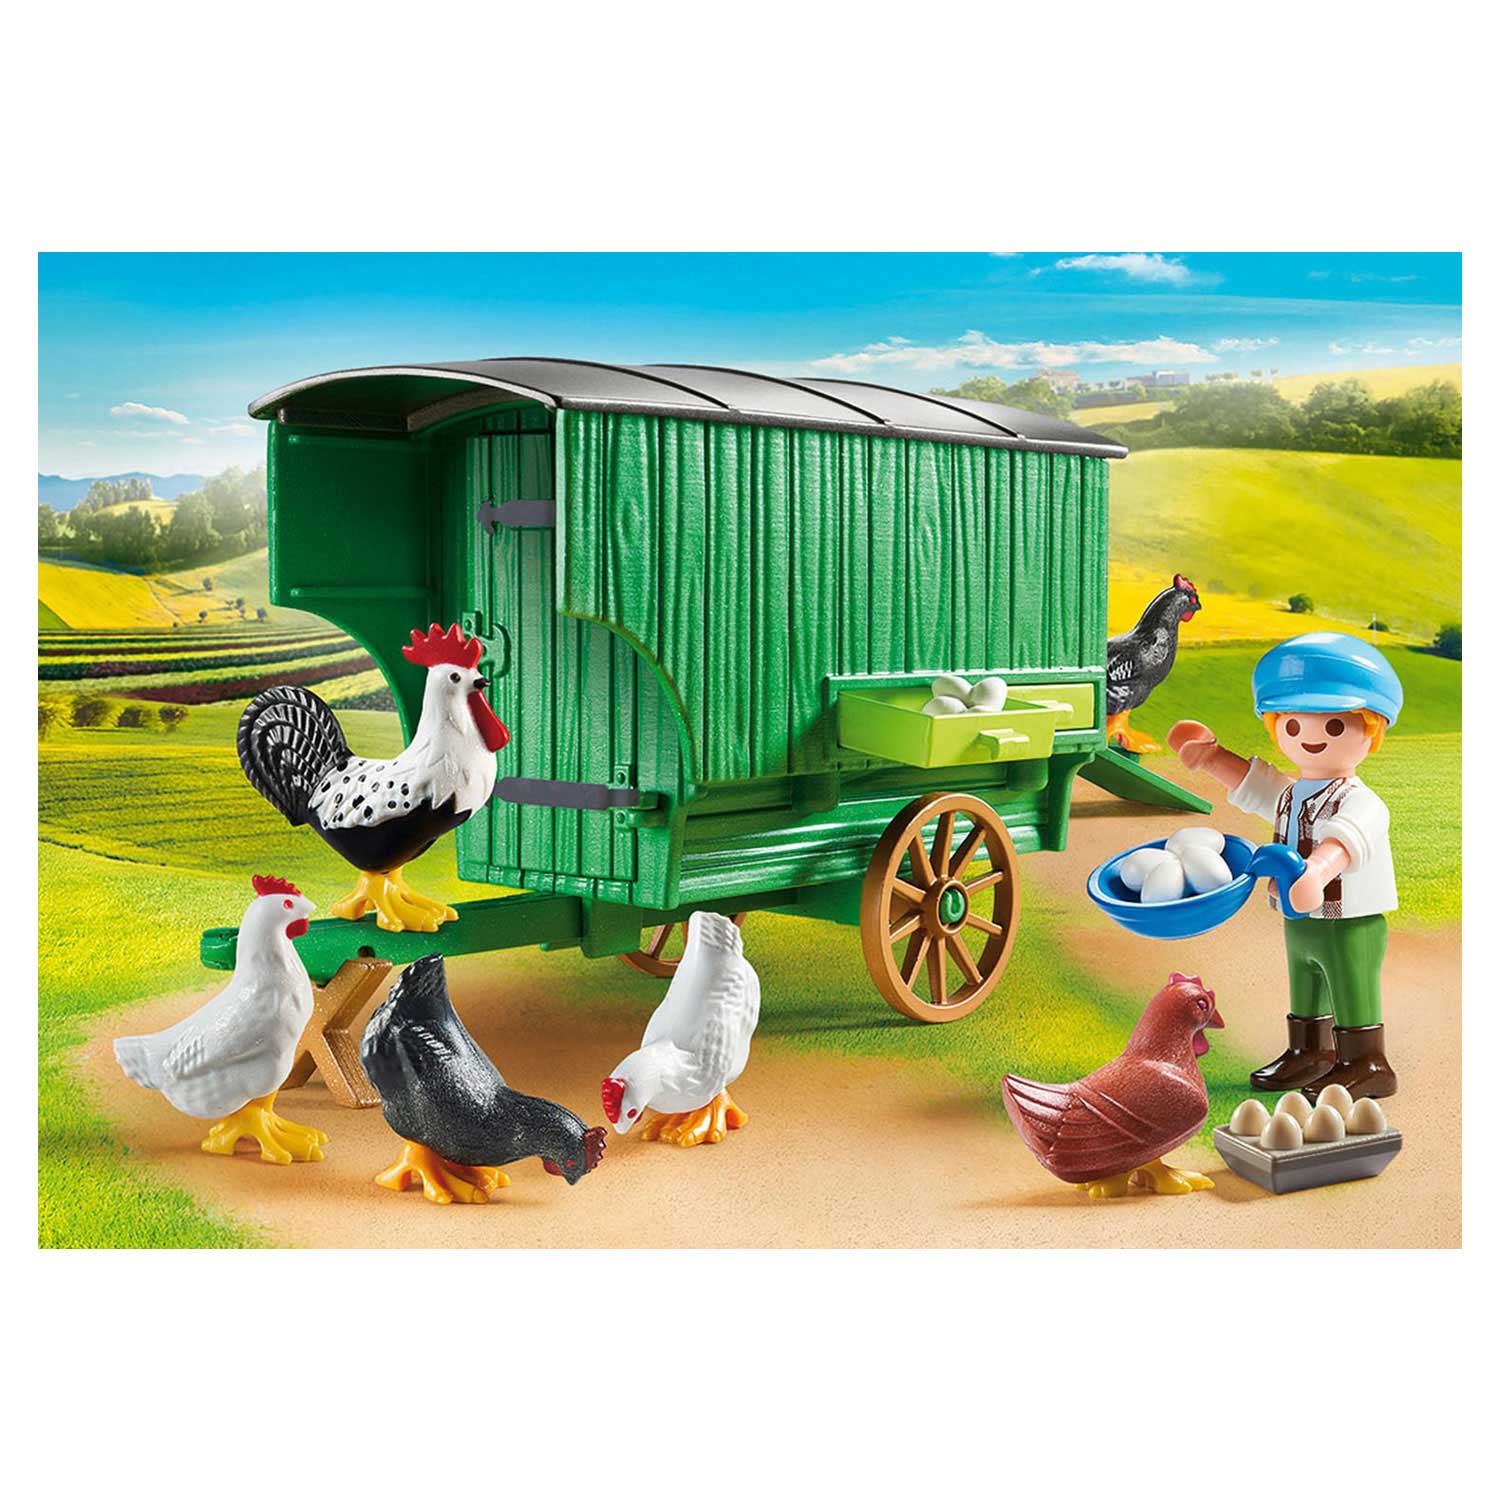 Playmobil Country Child mit Hühnerstall - 70138